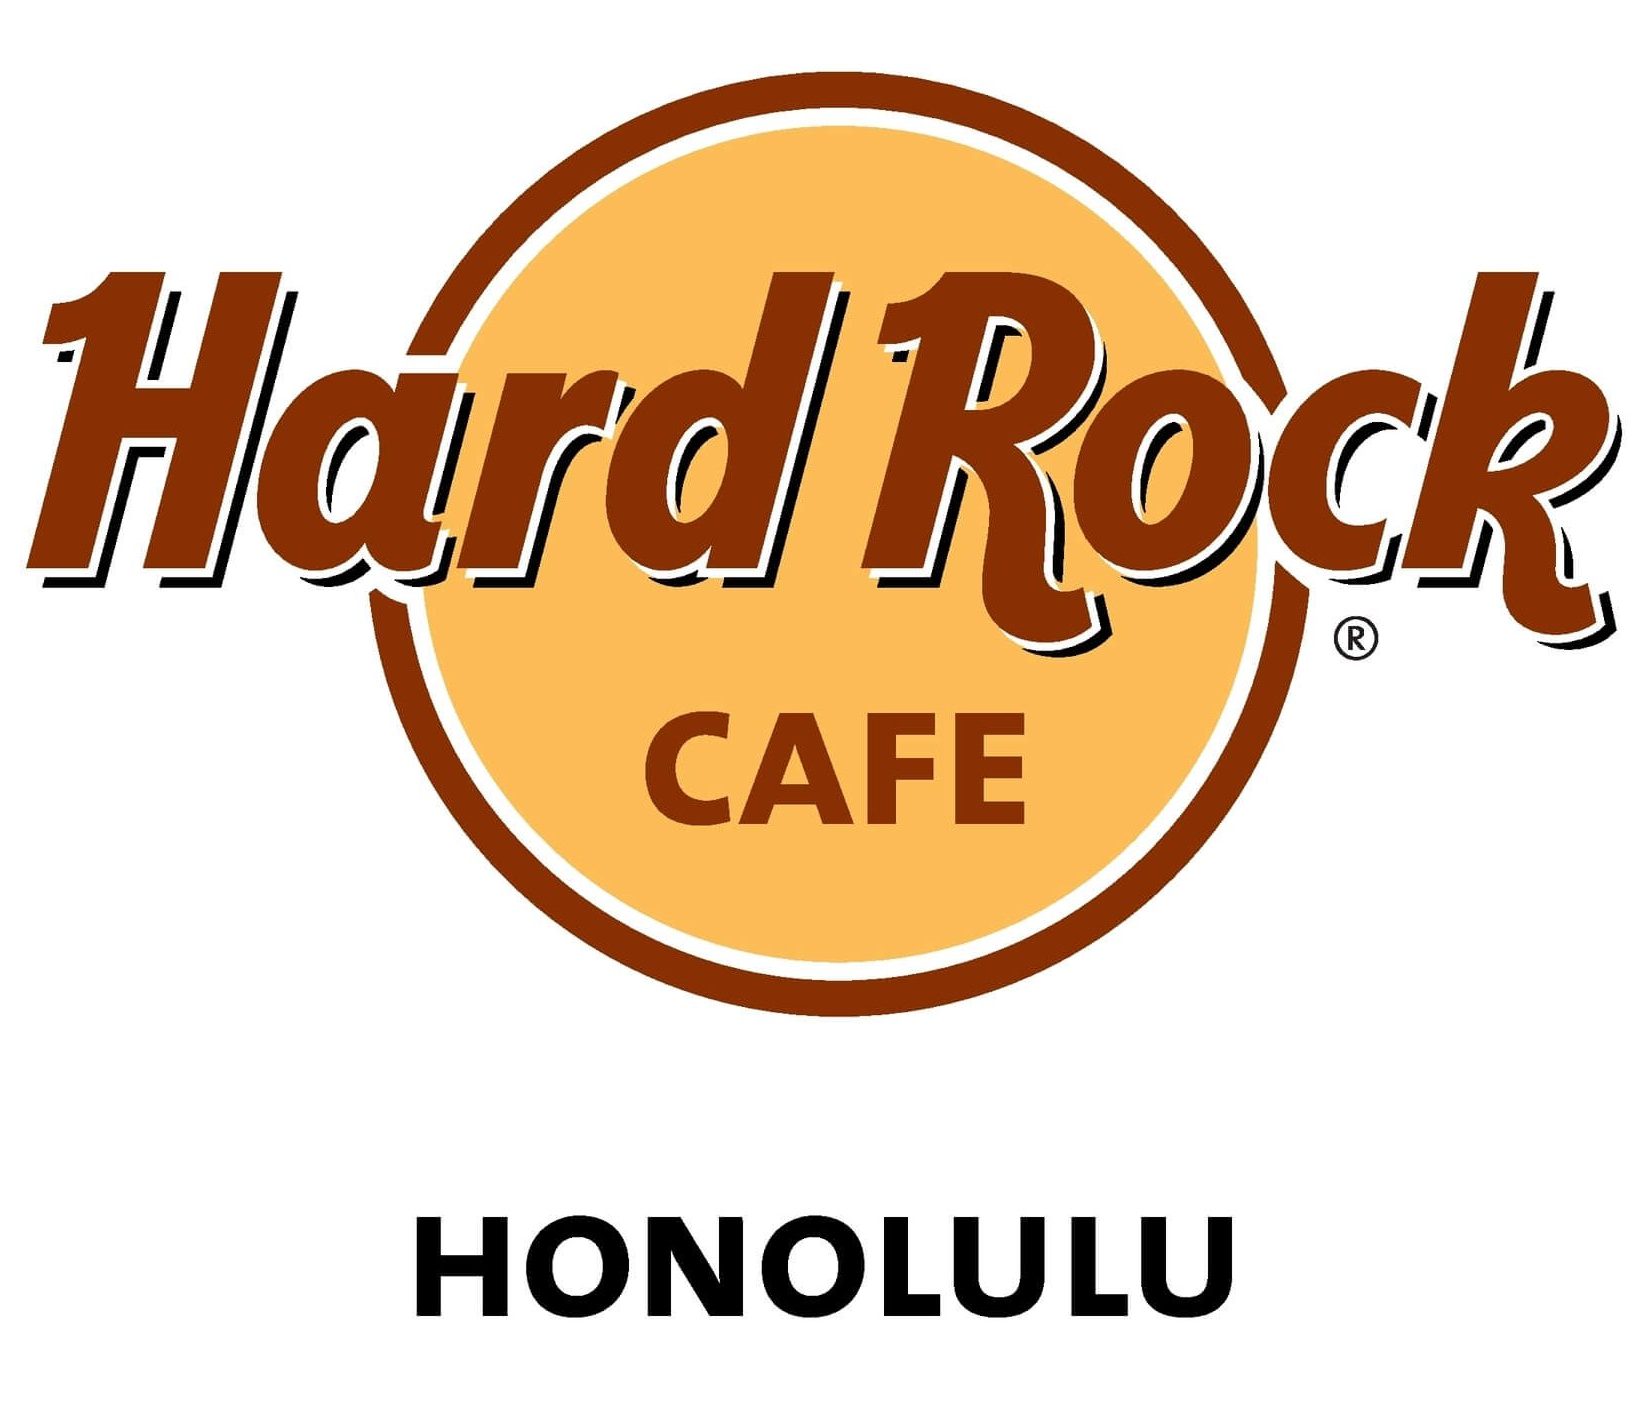 Hard Rock Cafe Honolulu logo